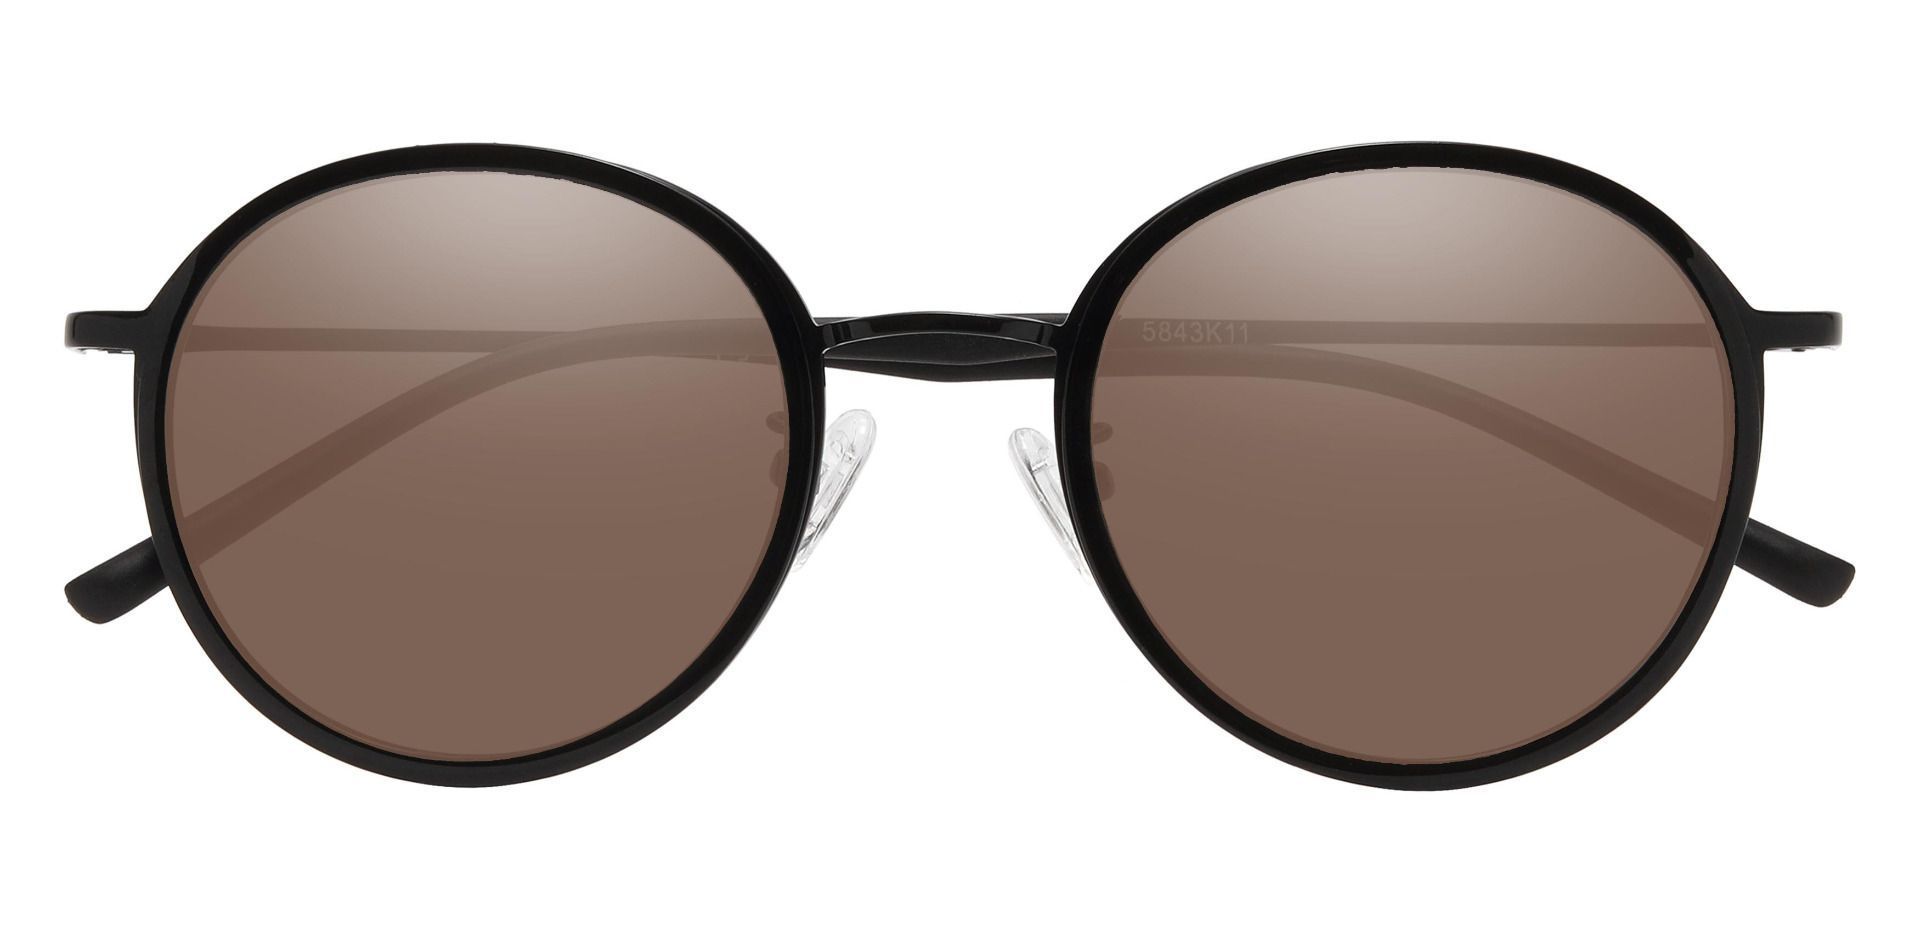 Brunswick Round Non-Rx Sunglasses - Black Frame With Brown Lenses